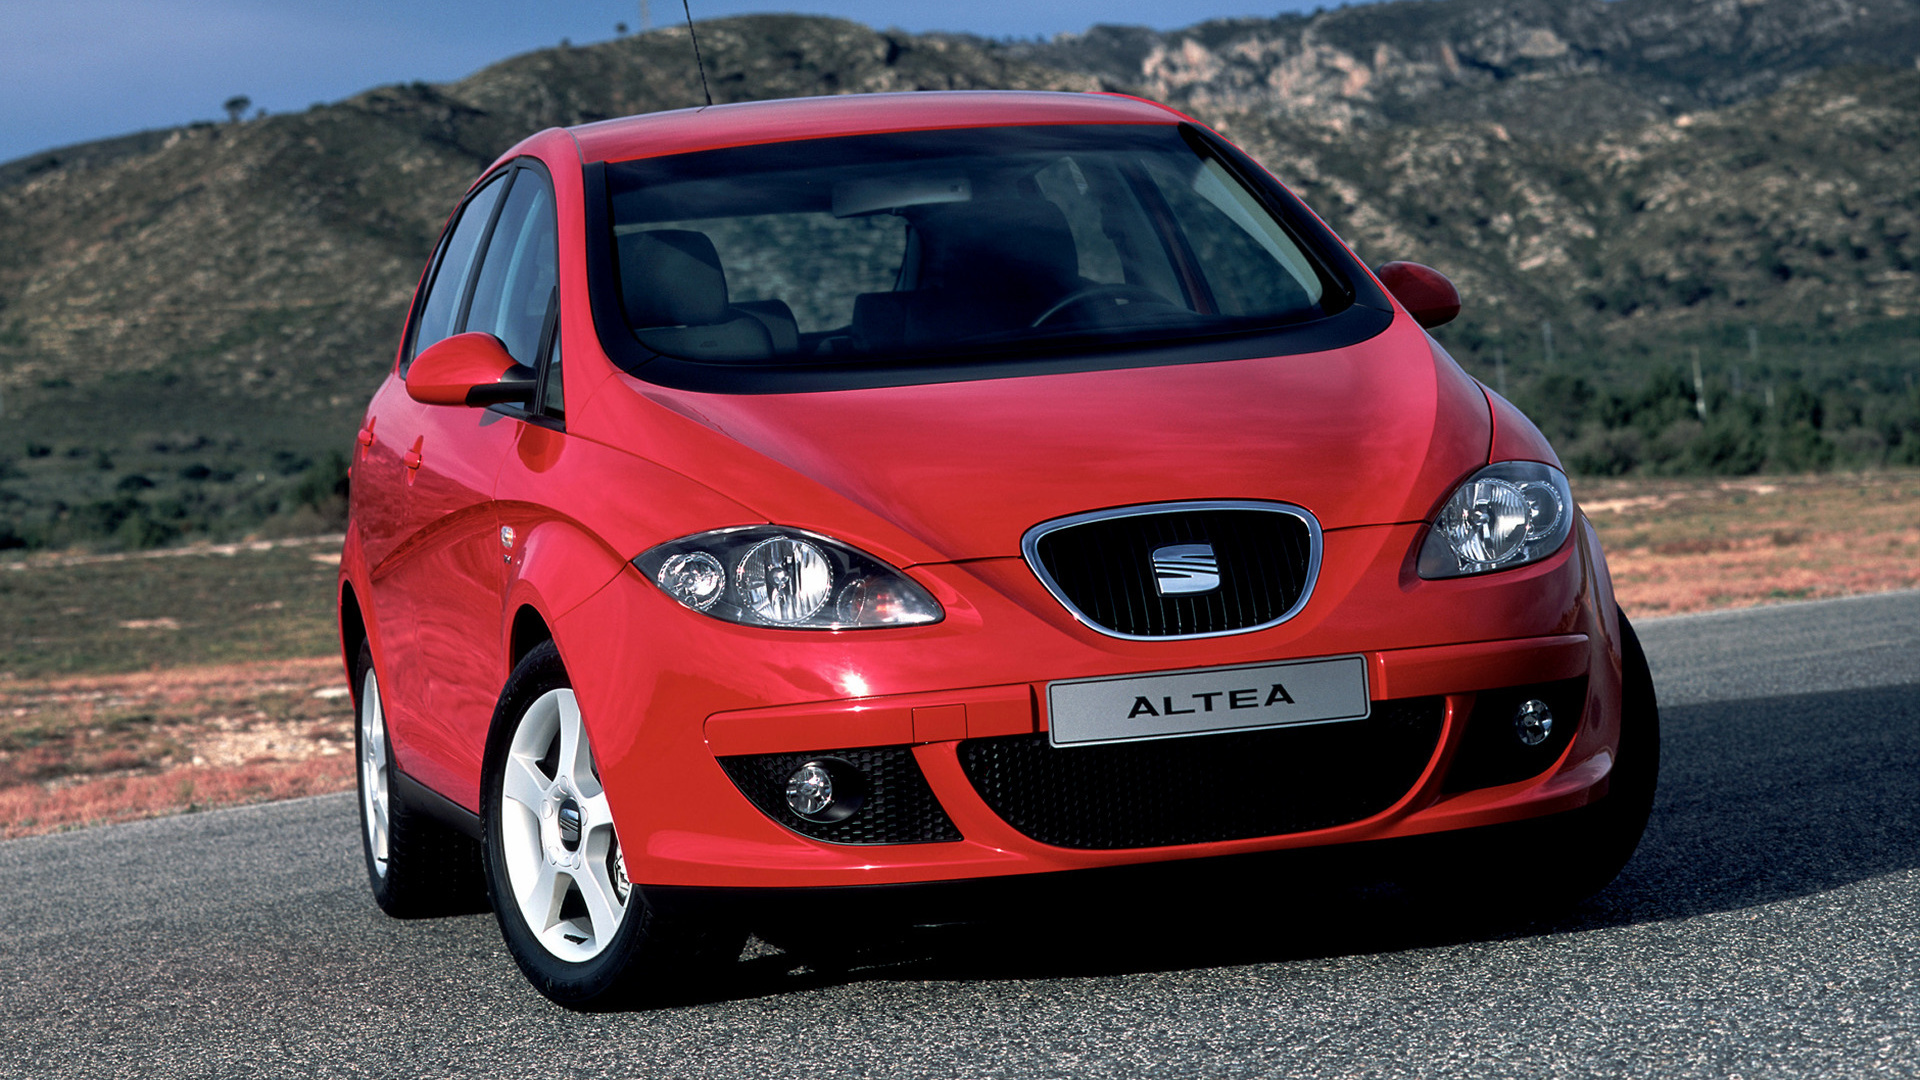 Seat Altea, 2004 model, HD wallpapers, Car Pixel images, 1920x1080 Full HD Desktop